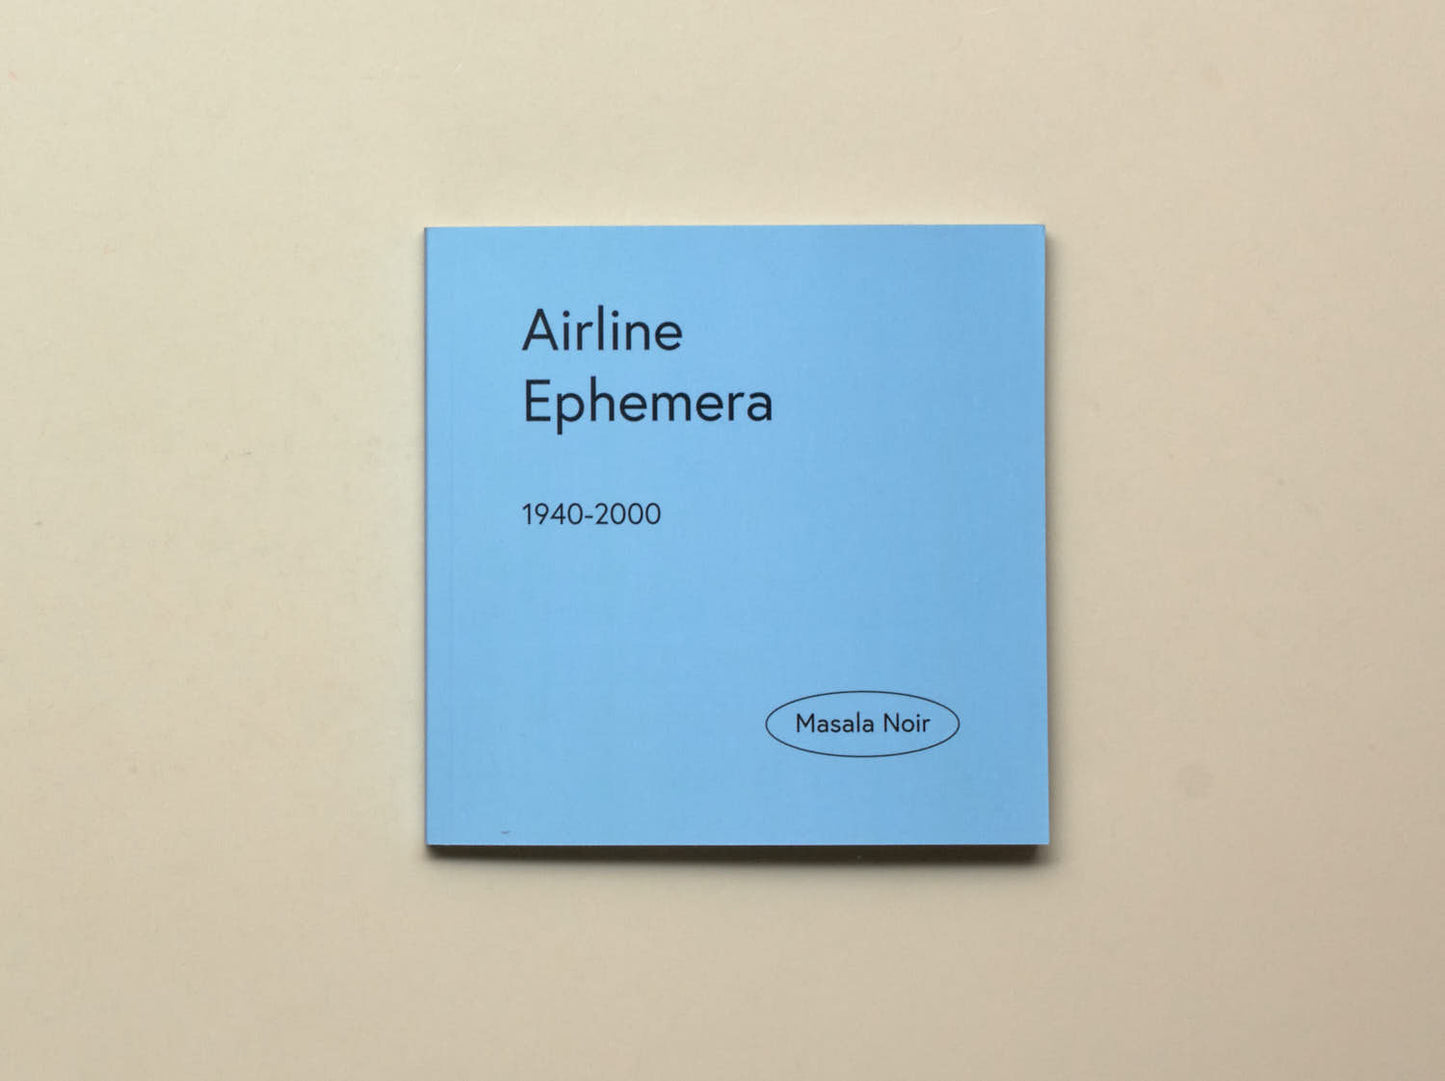 Airline Ephemera 1950 - 2000